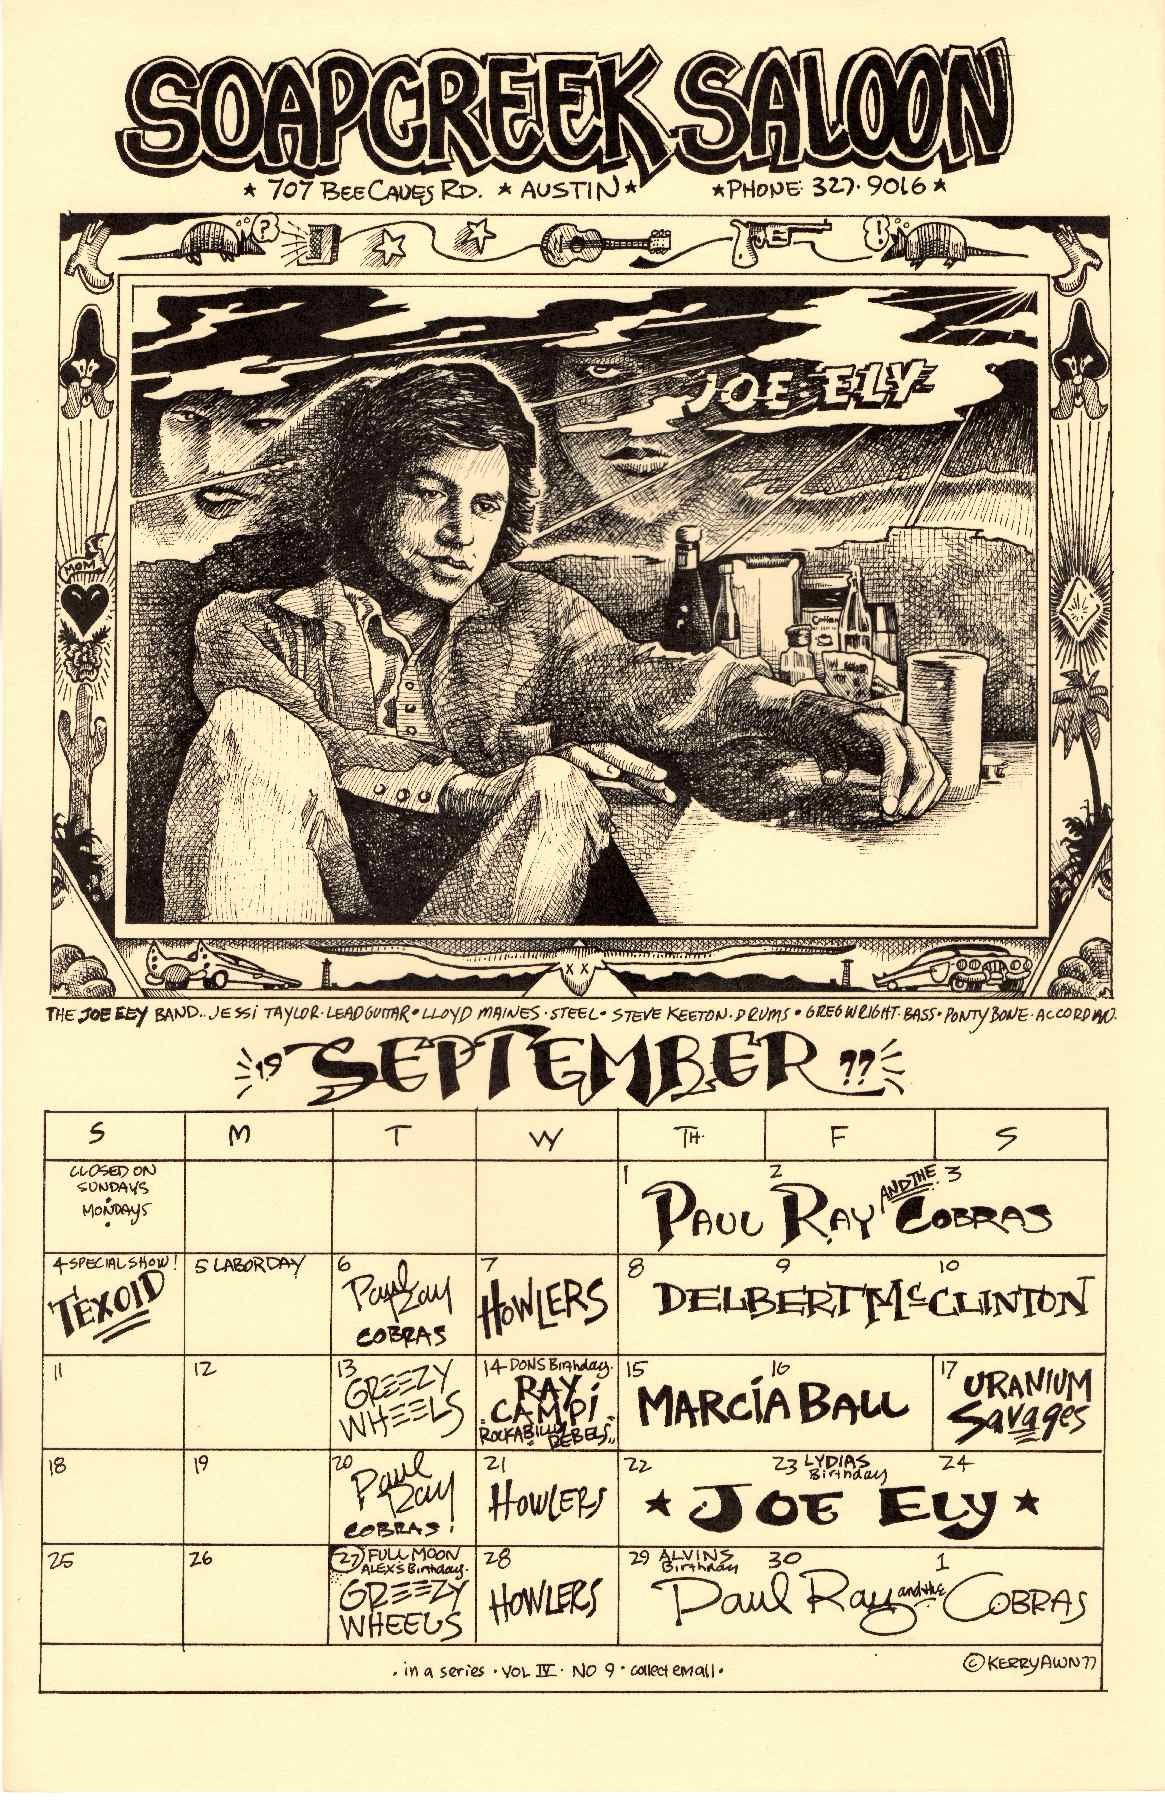 1977.09.September Calendar.Soap Creek Saloon.Awn.JPG